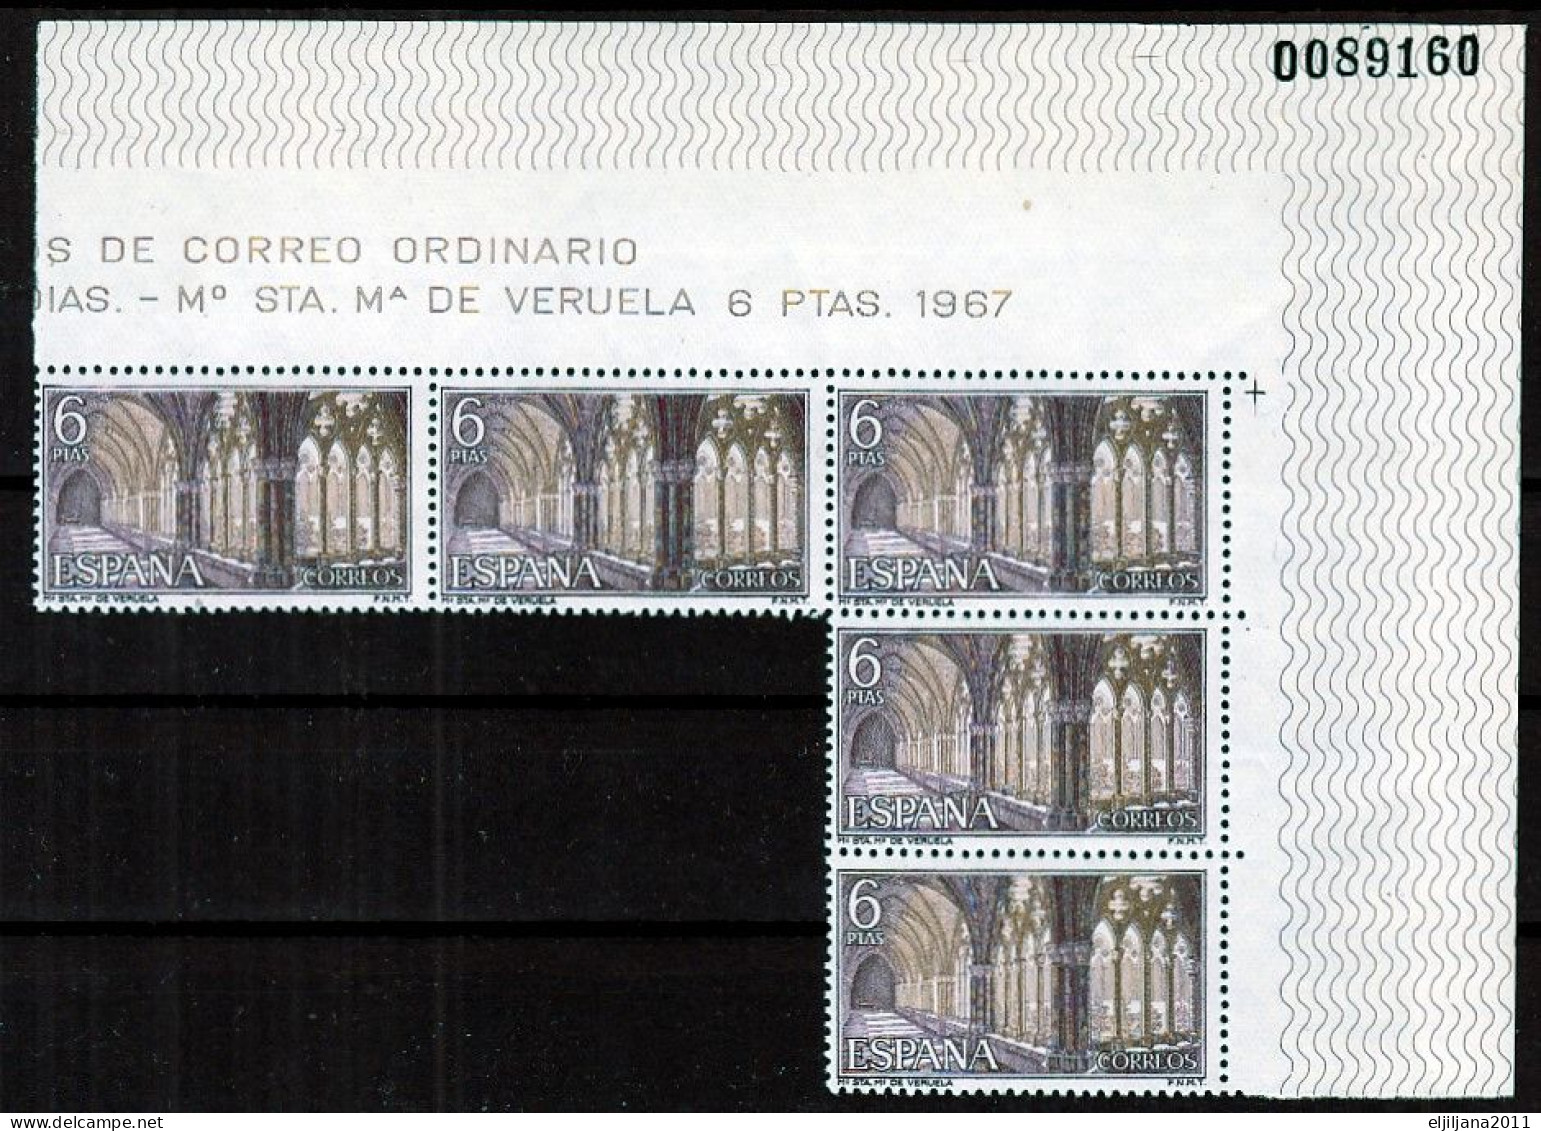 ⁕ SPAIN / ESPANA 1967 ⁕ Monasteries And Abbeys Mi.1728 - 1730 X 5 ⁕ MNH - See Scan - Unused Stamps